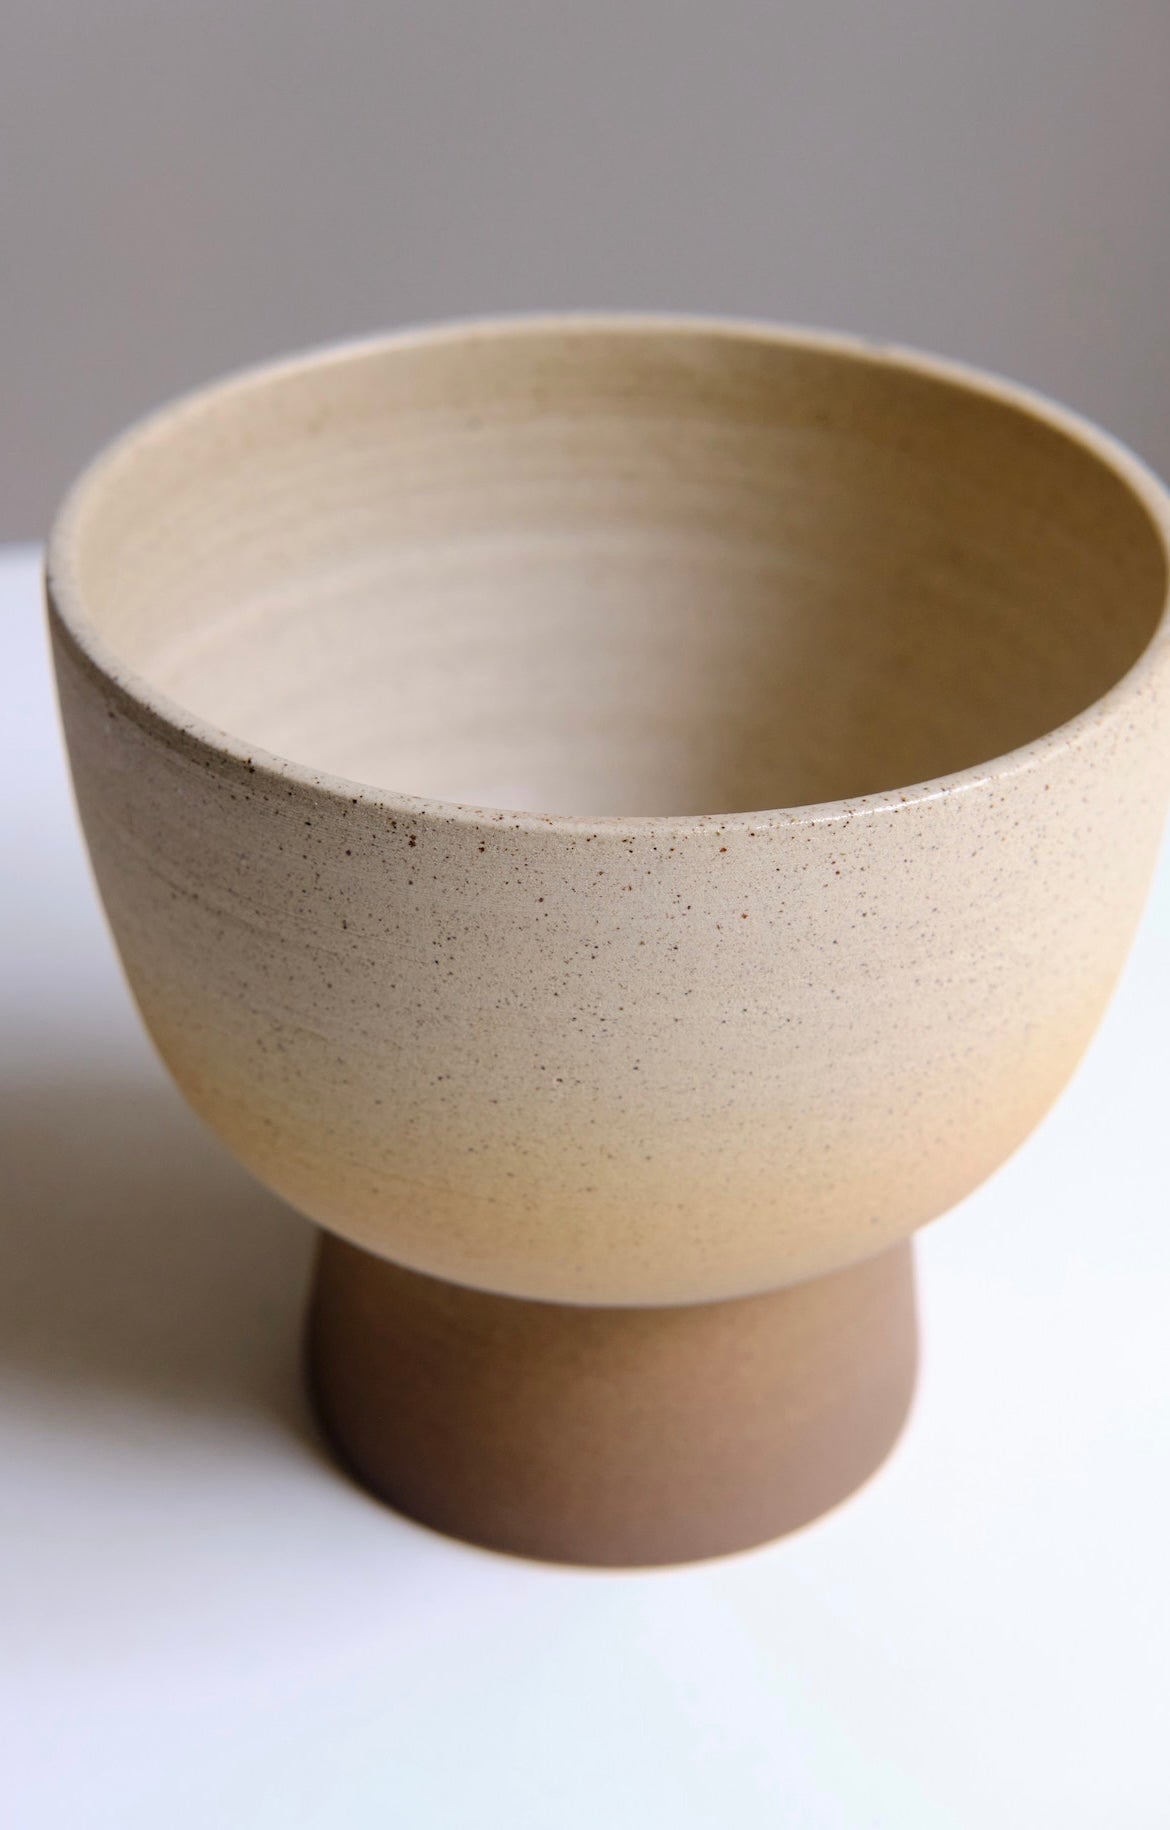 Pedestal bowl no. 10